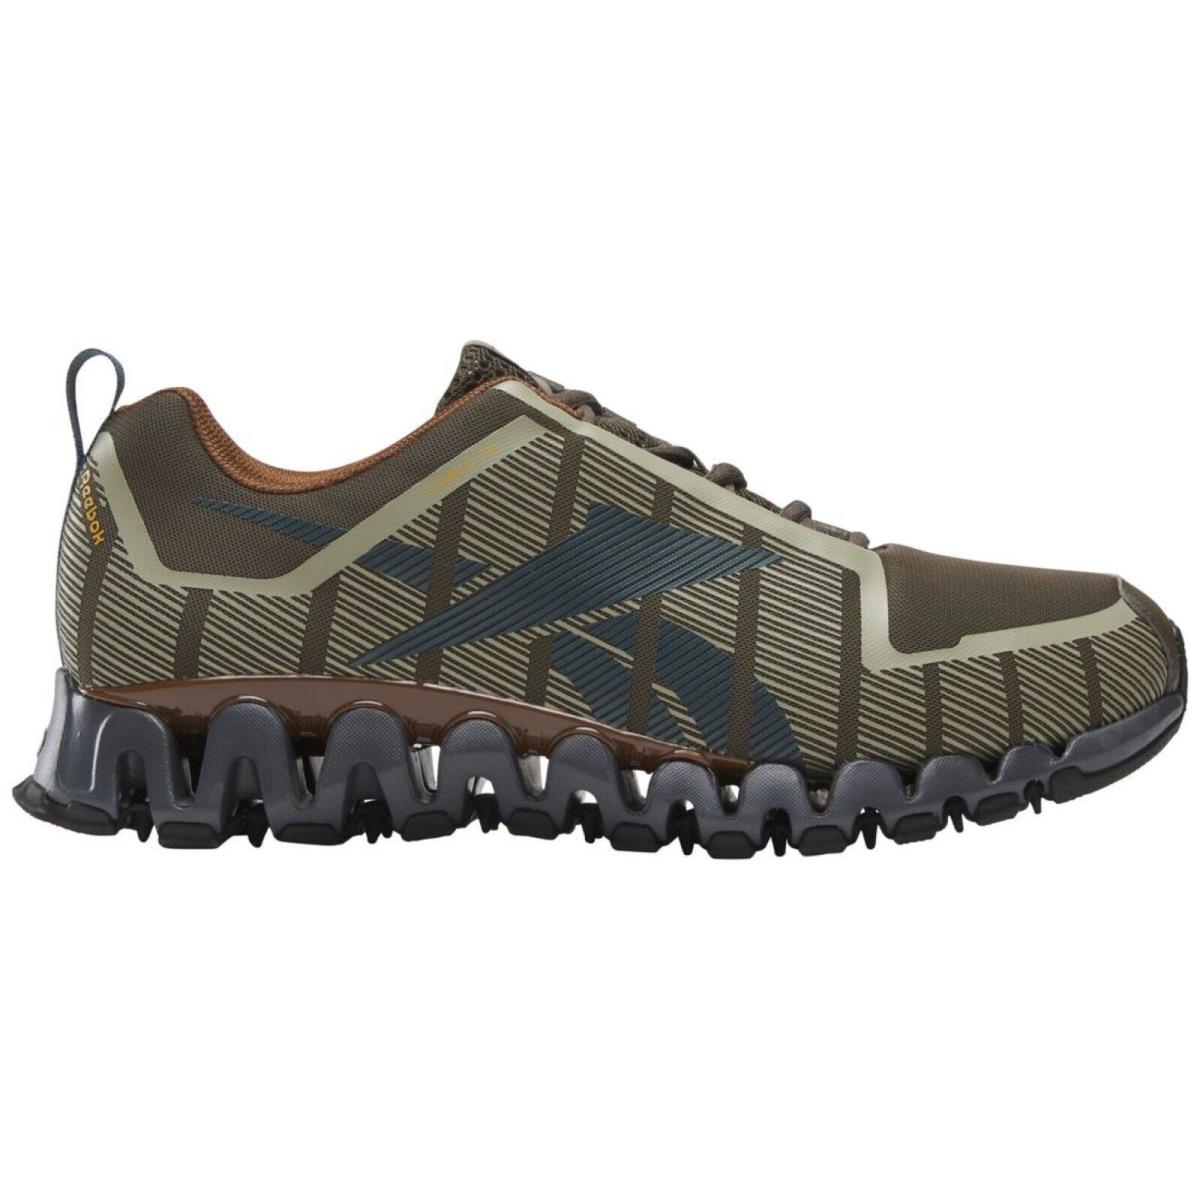 Reebok Zigwild Trail 6 Running Shoes Men`s Sneakers Lightweight Hiking Walking - Beige, Manufacturer: Beige